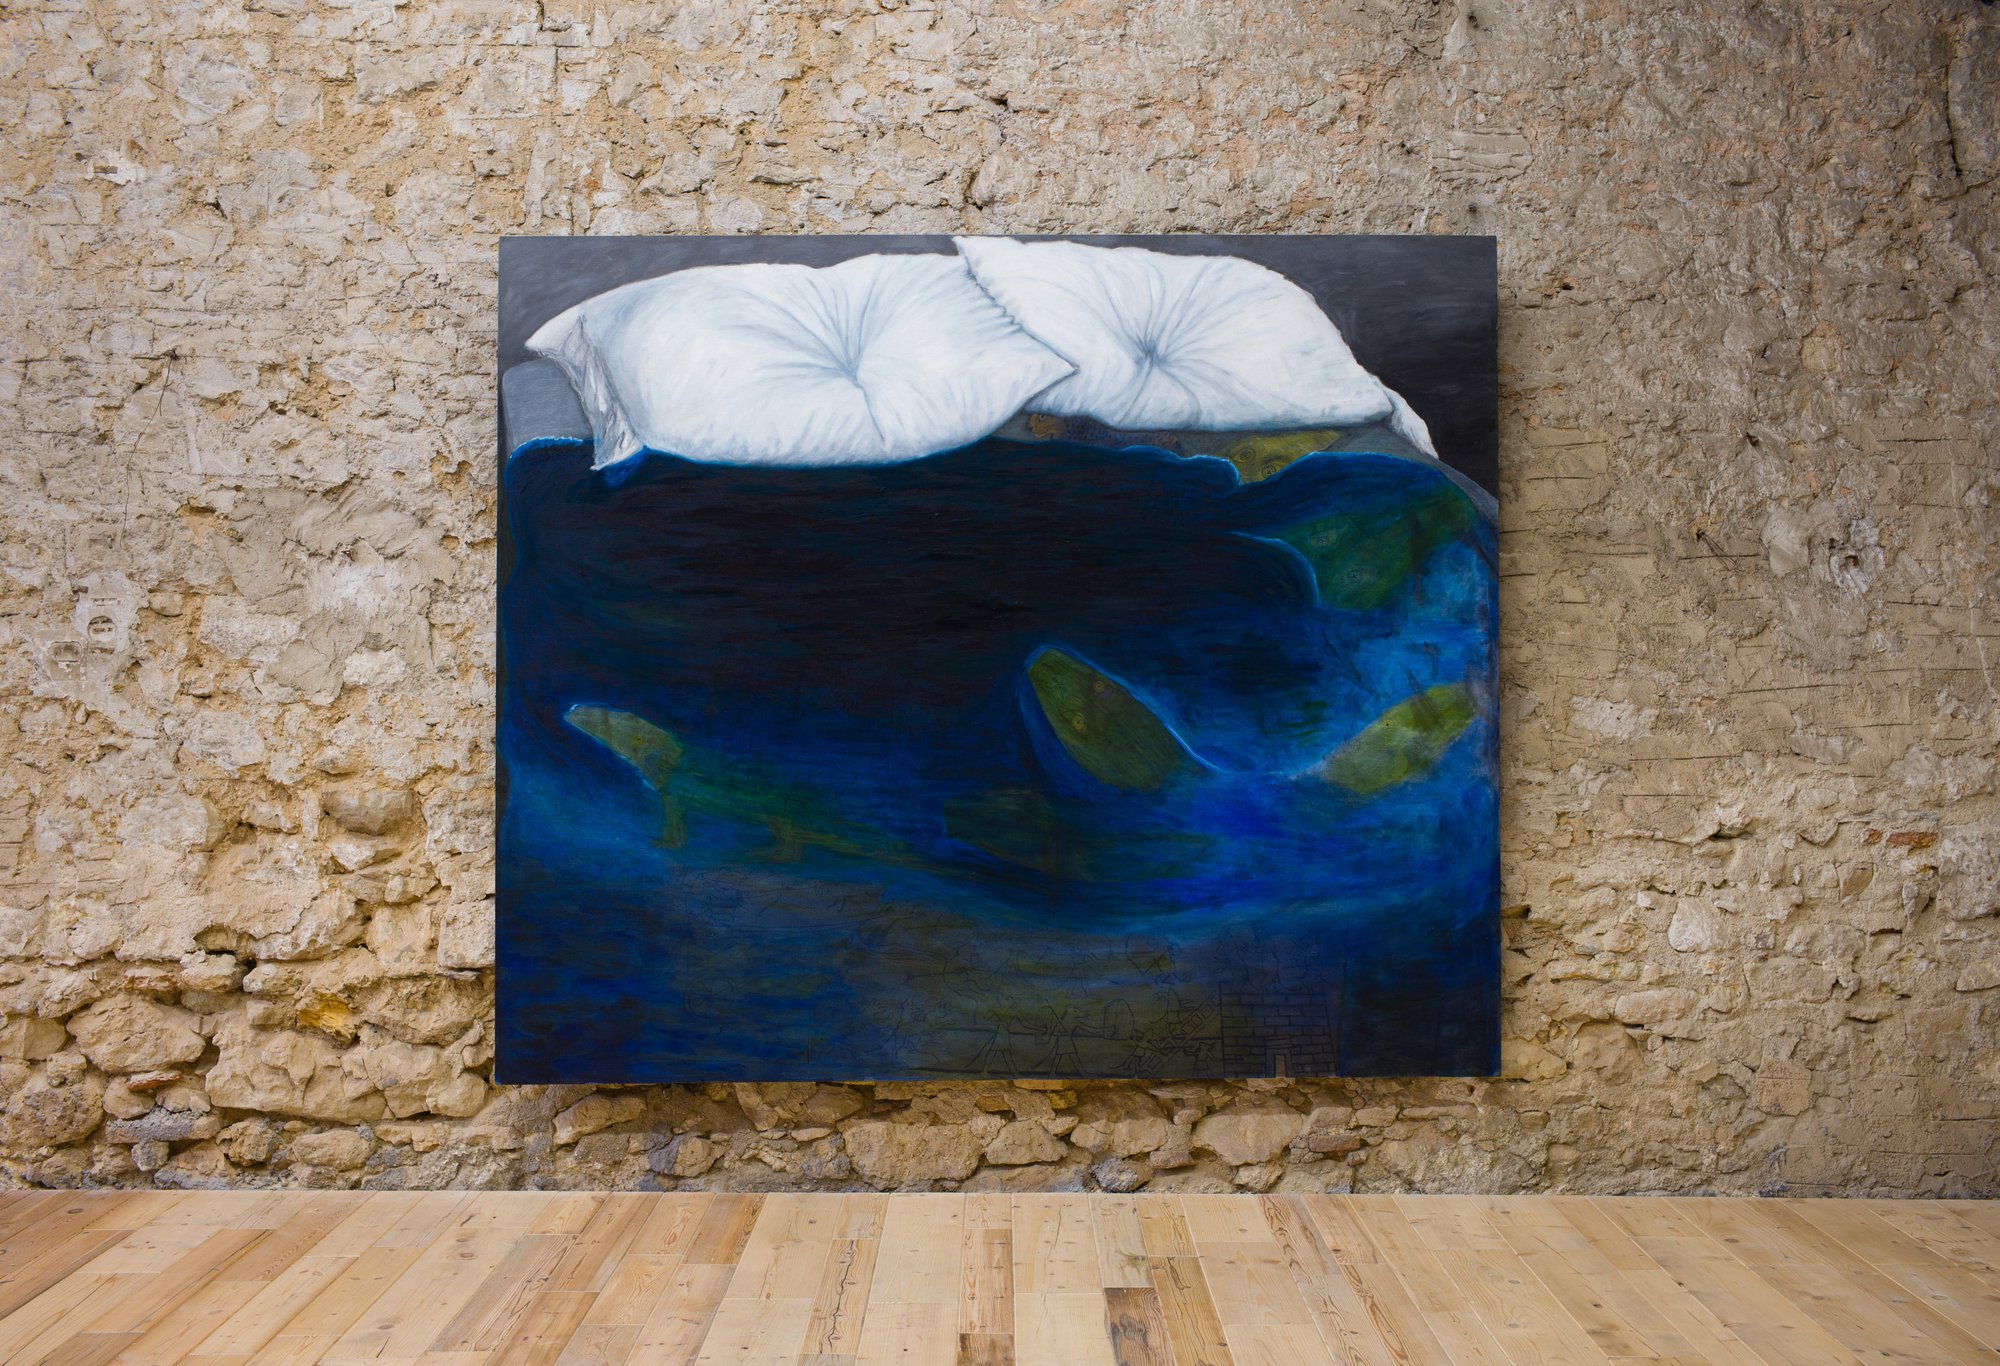 Leidy Churchman, Untitled, oil on linen, 259 x 218.5 cm (102 x 86 in), 2018